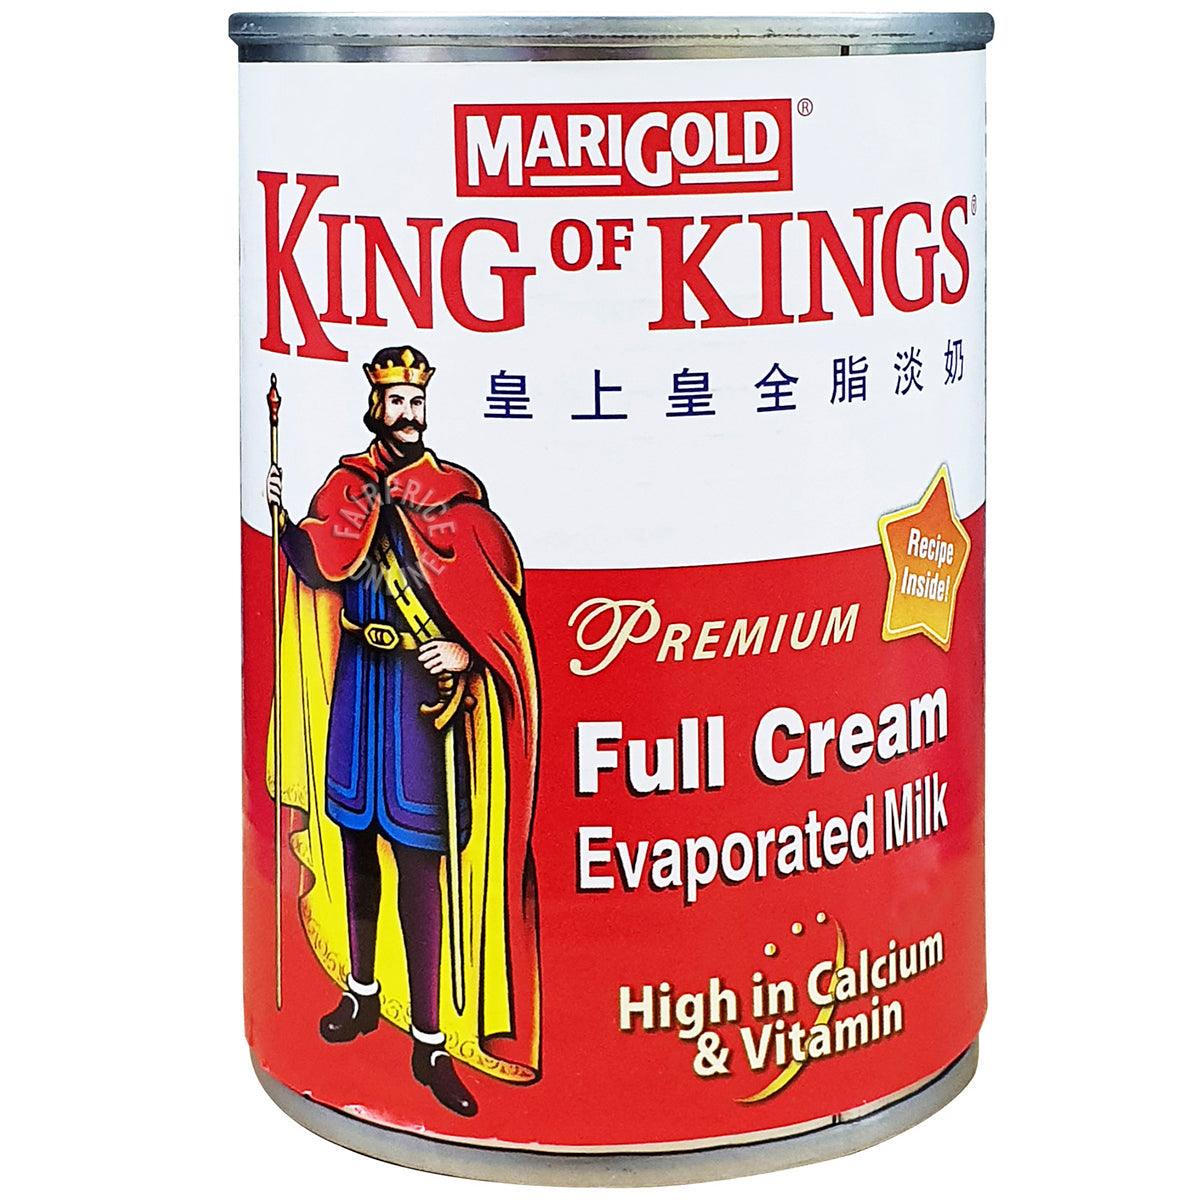 KING OF KING EVAPORATED MILK 390GM - Nazar Jan's Supermarket